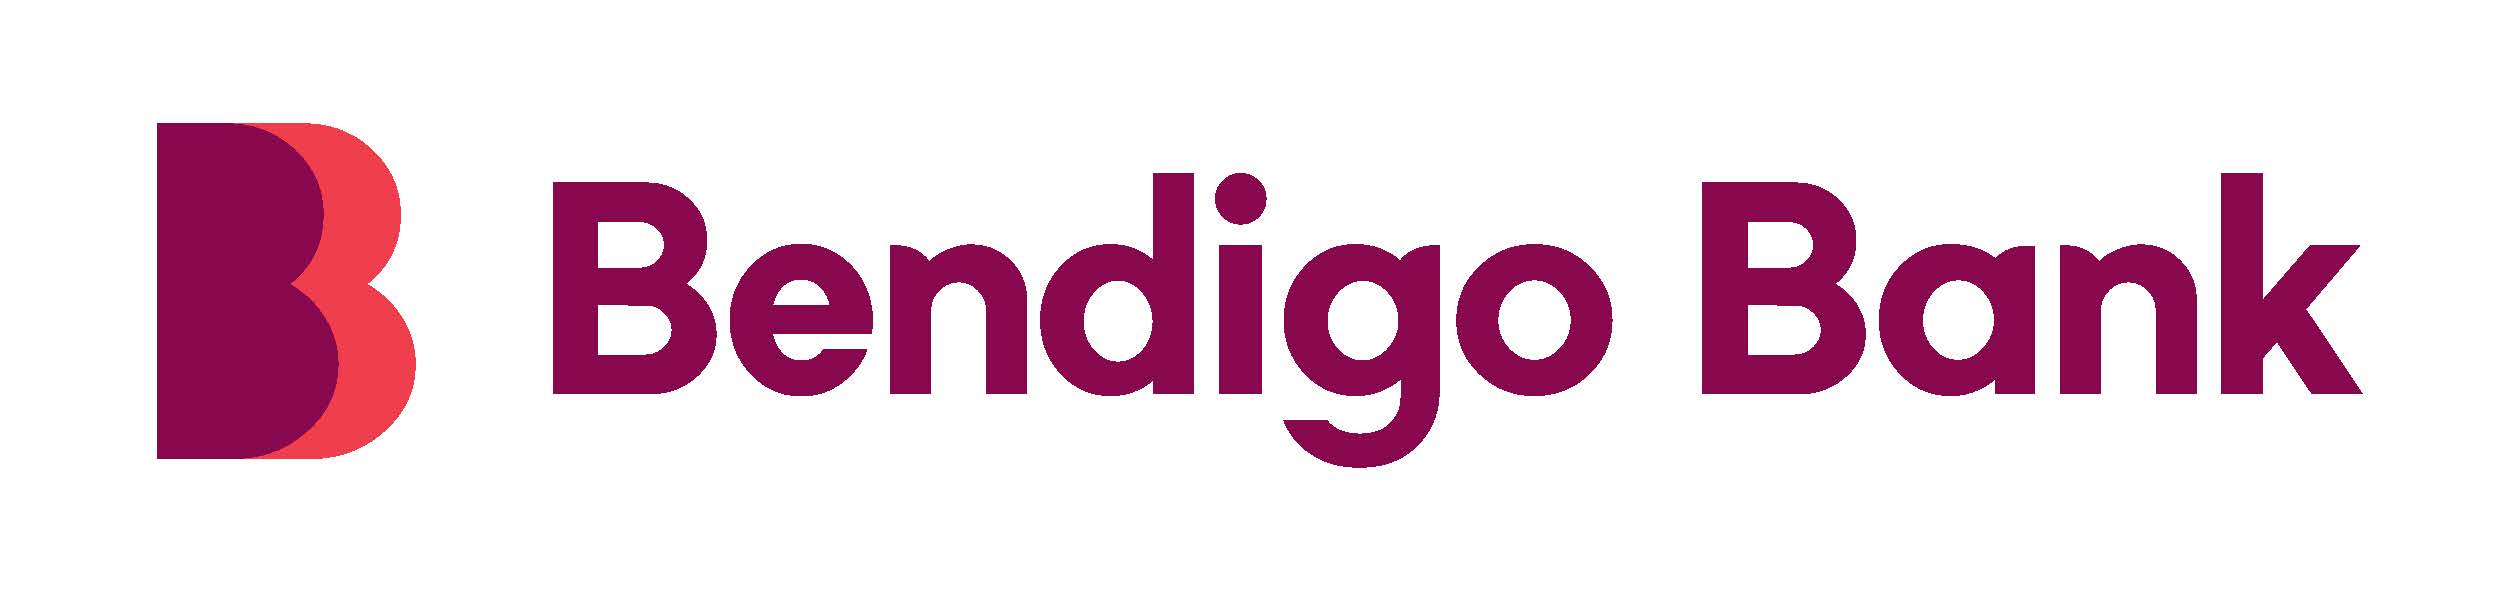 Bendigo Bank sponsor logo